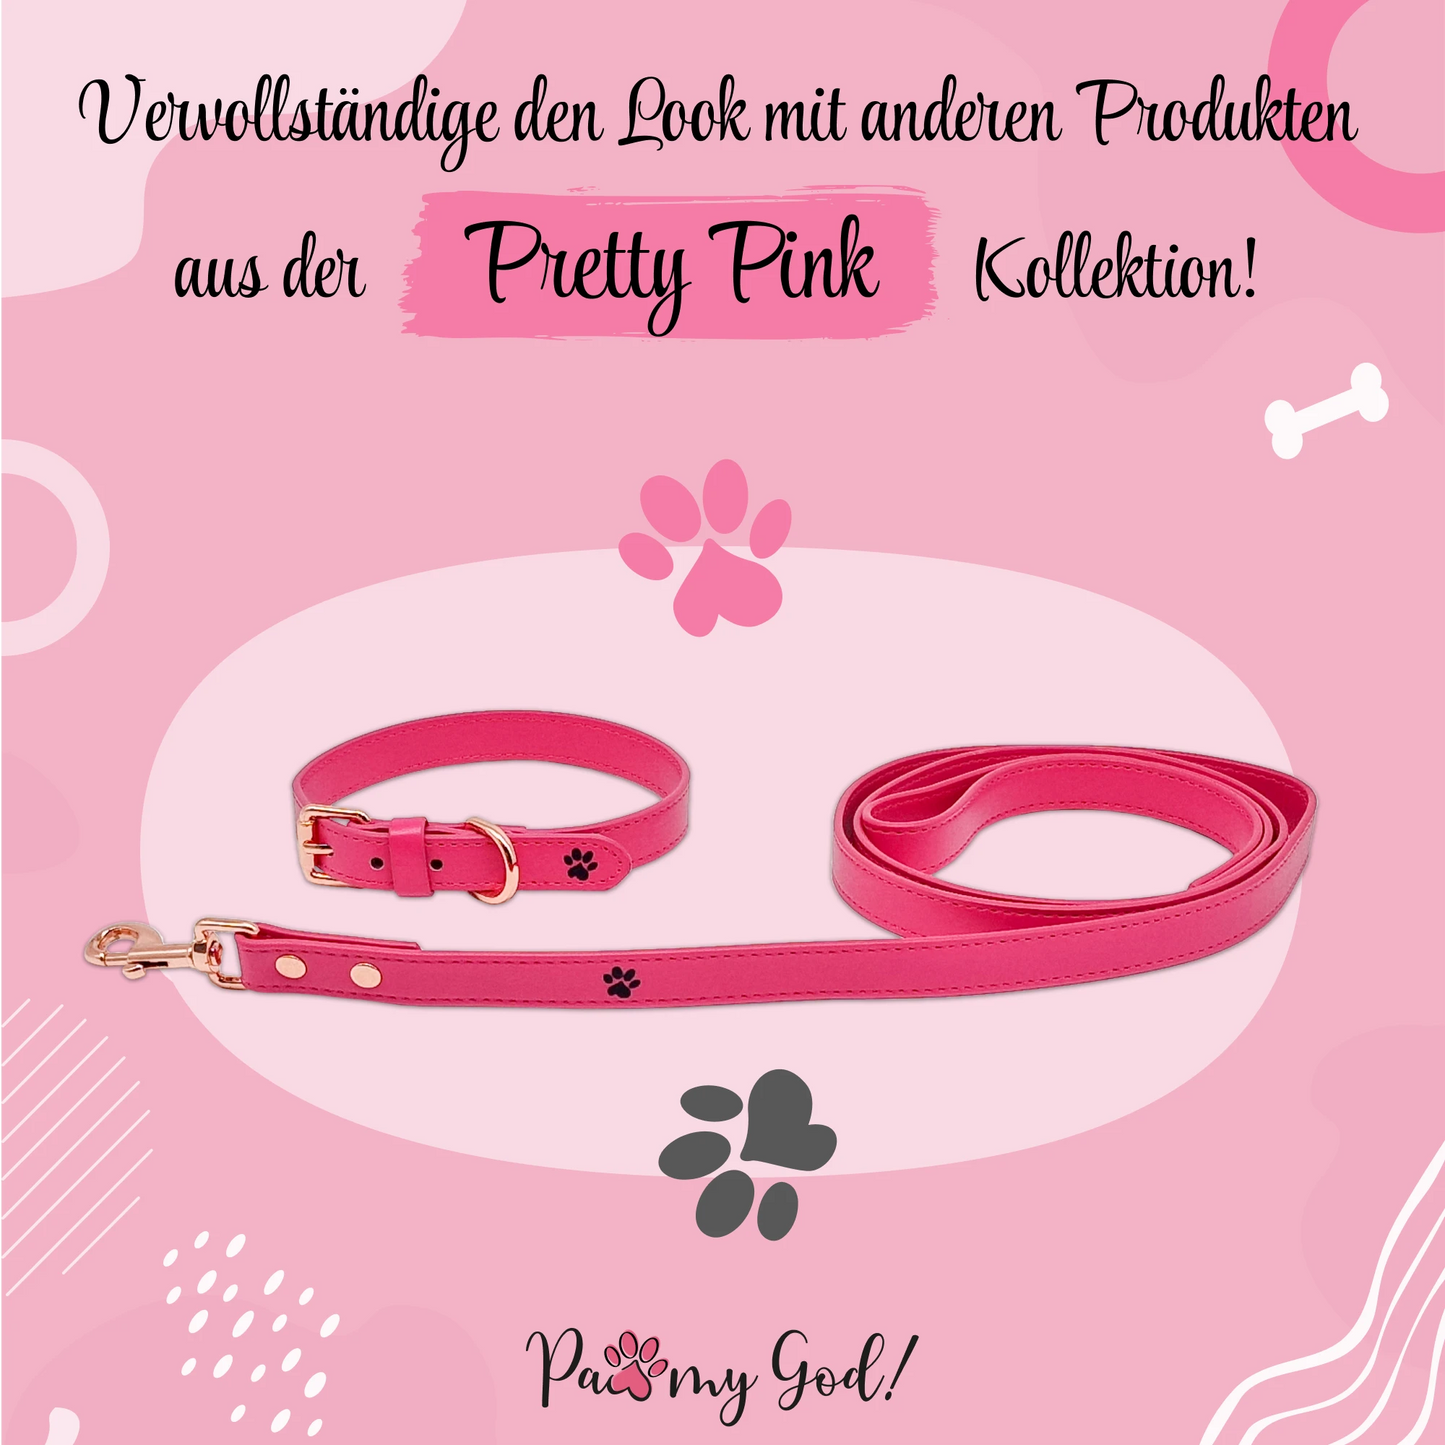 Pretty Pink Collar